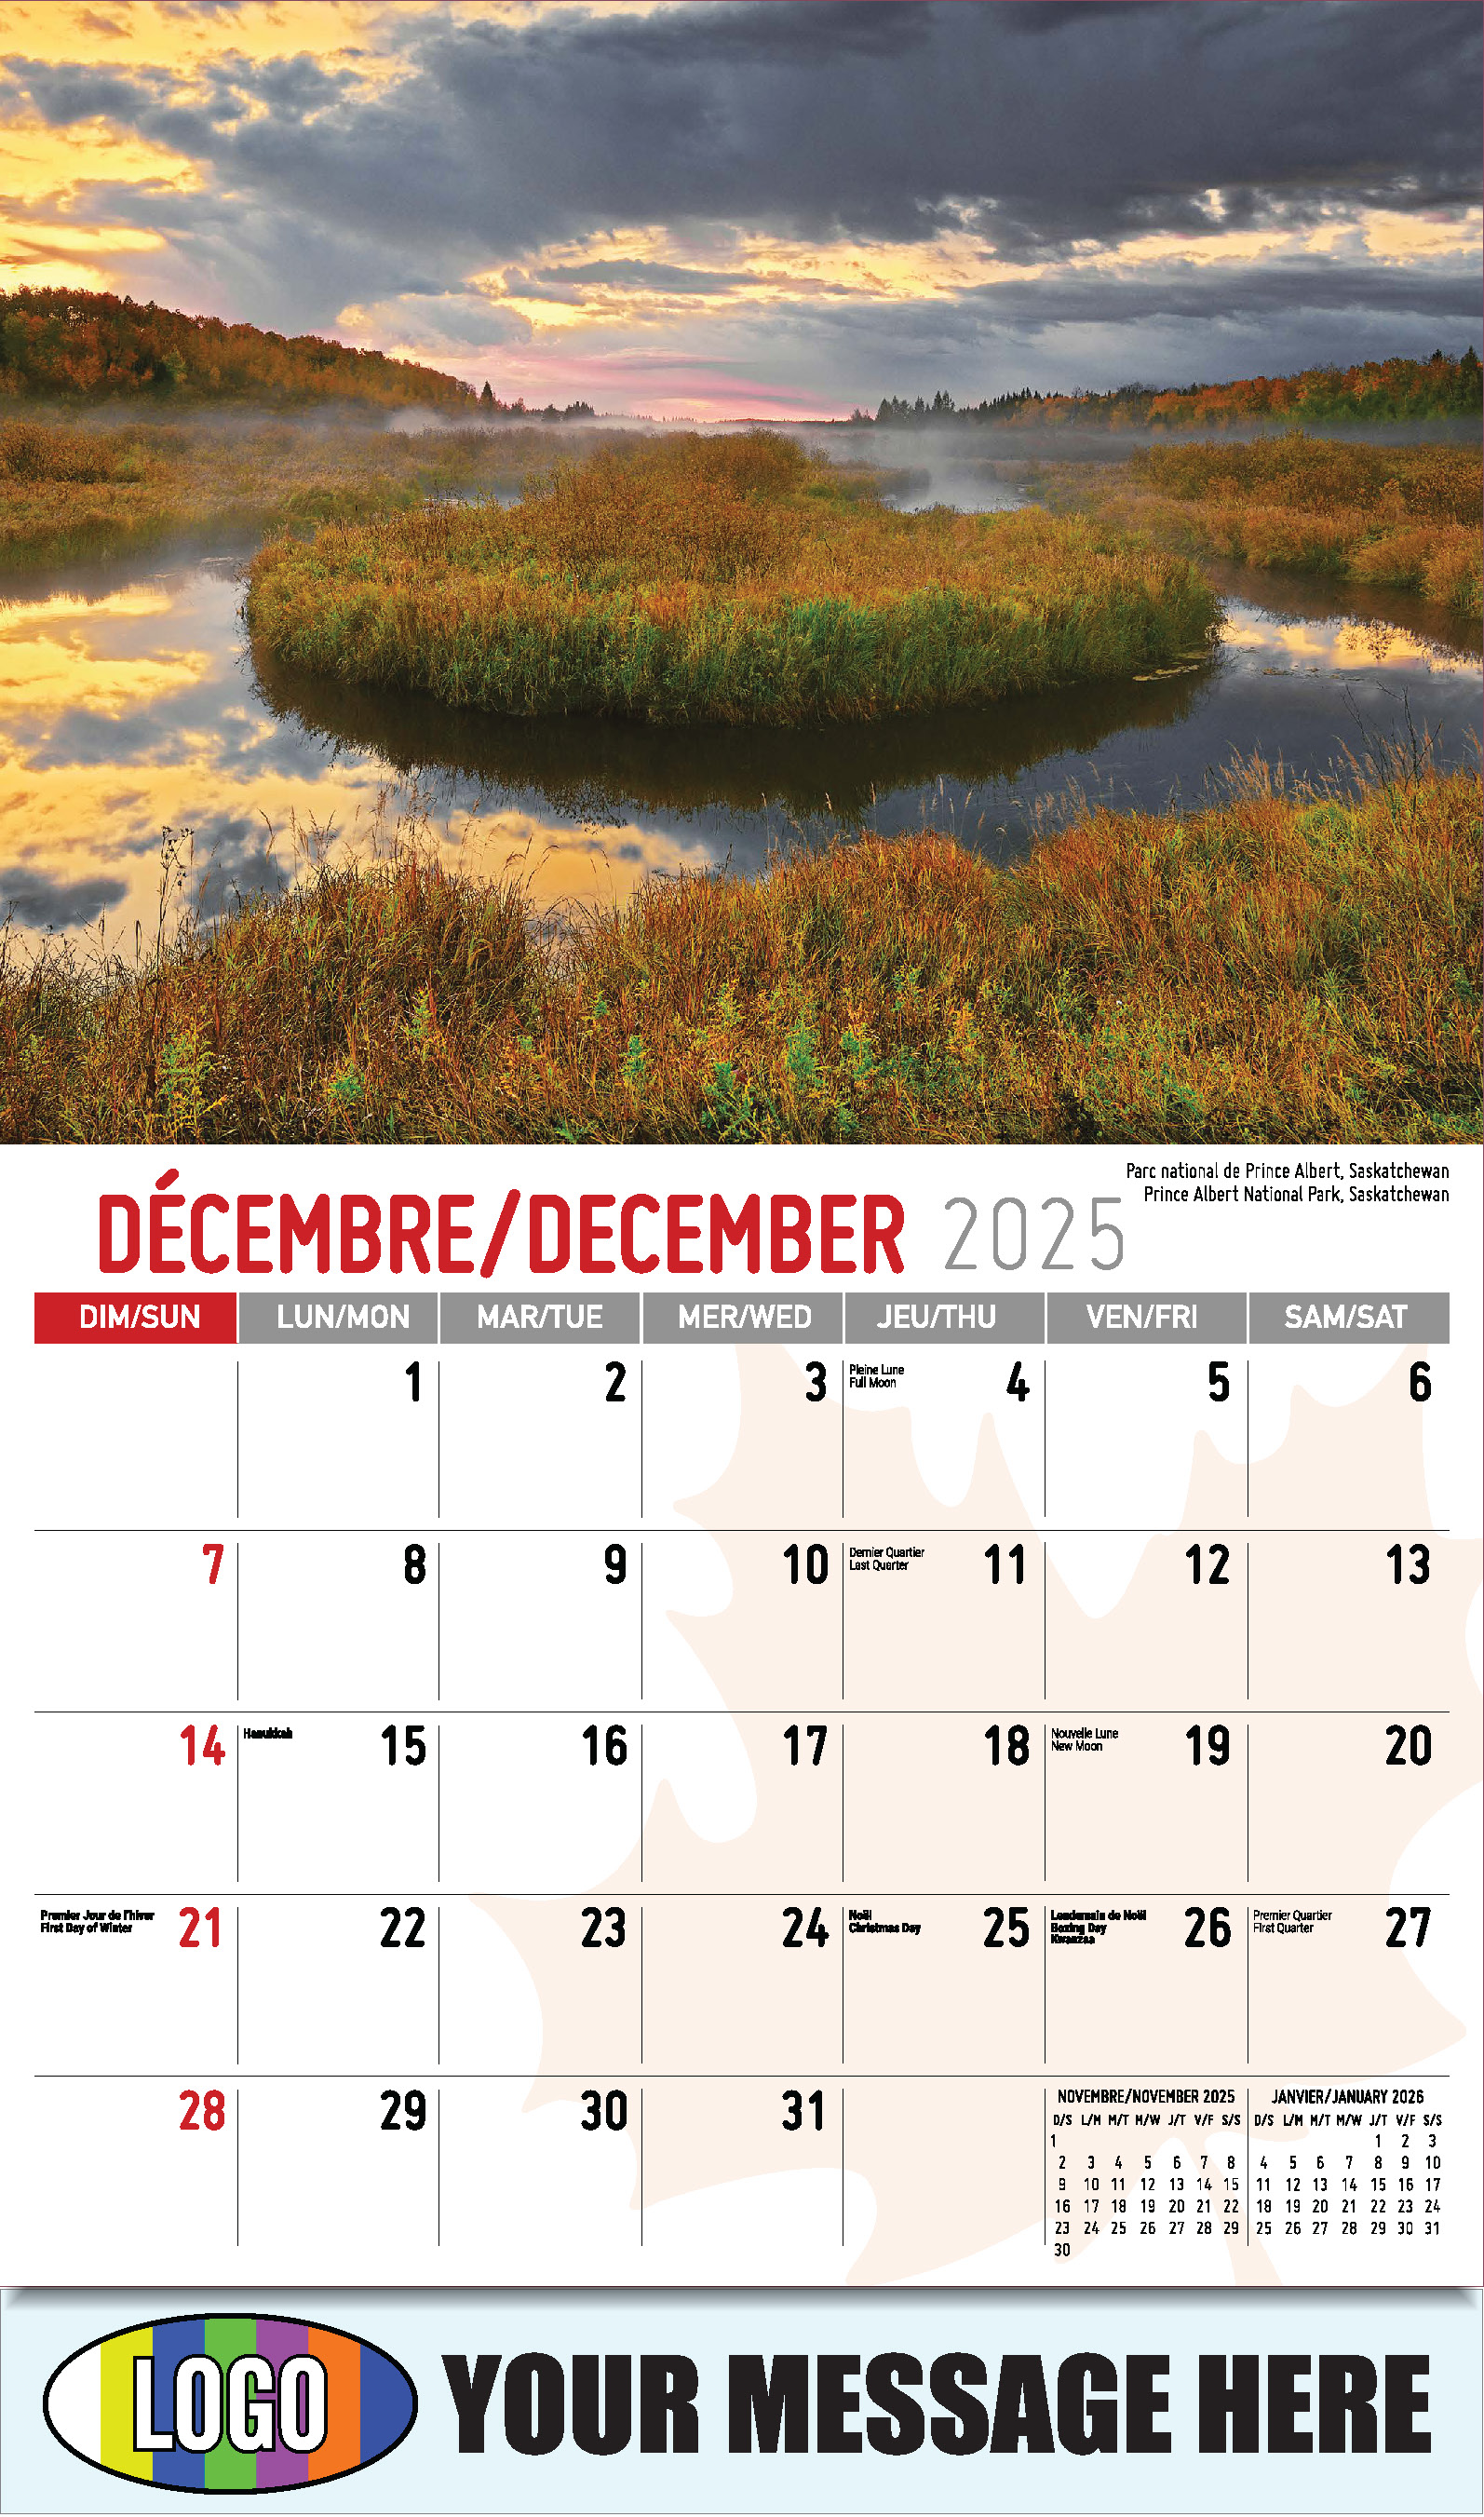 Scenes of Canada 2025 Bilingual Business Advertising Calendar - December